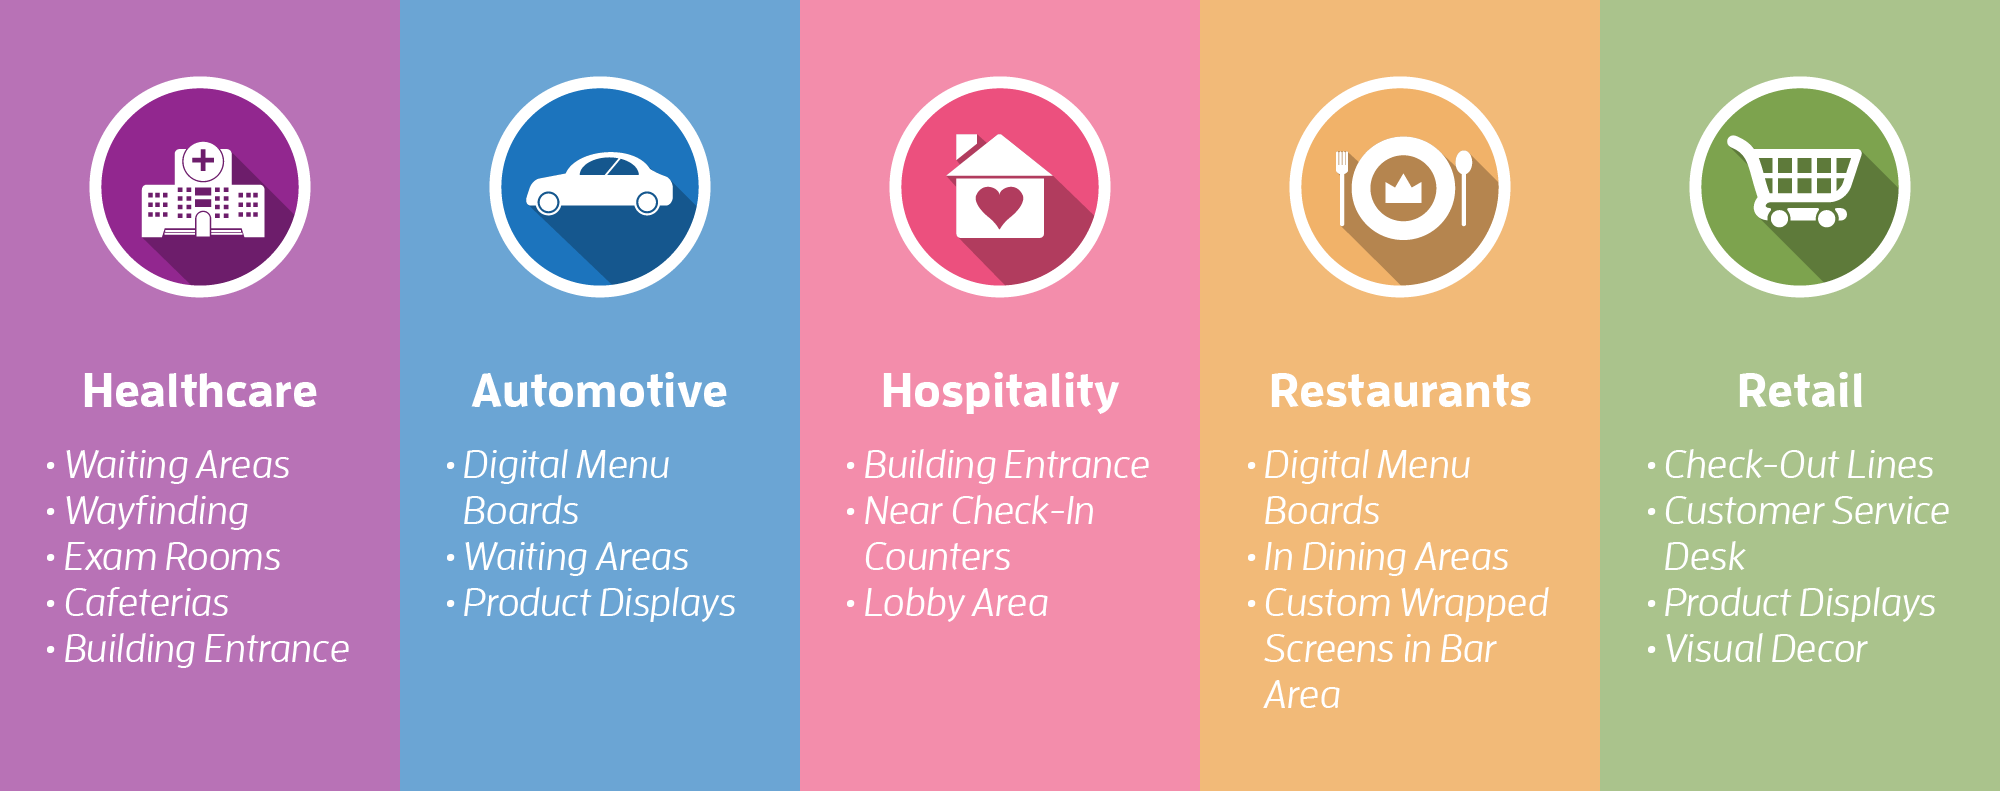 healthcare digital signage, automotive digital signage, hospitality digital signage, restaurant digital signage, retail digital signage